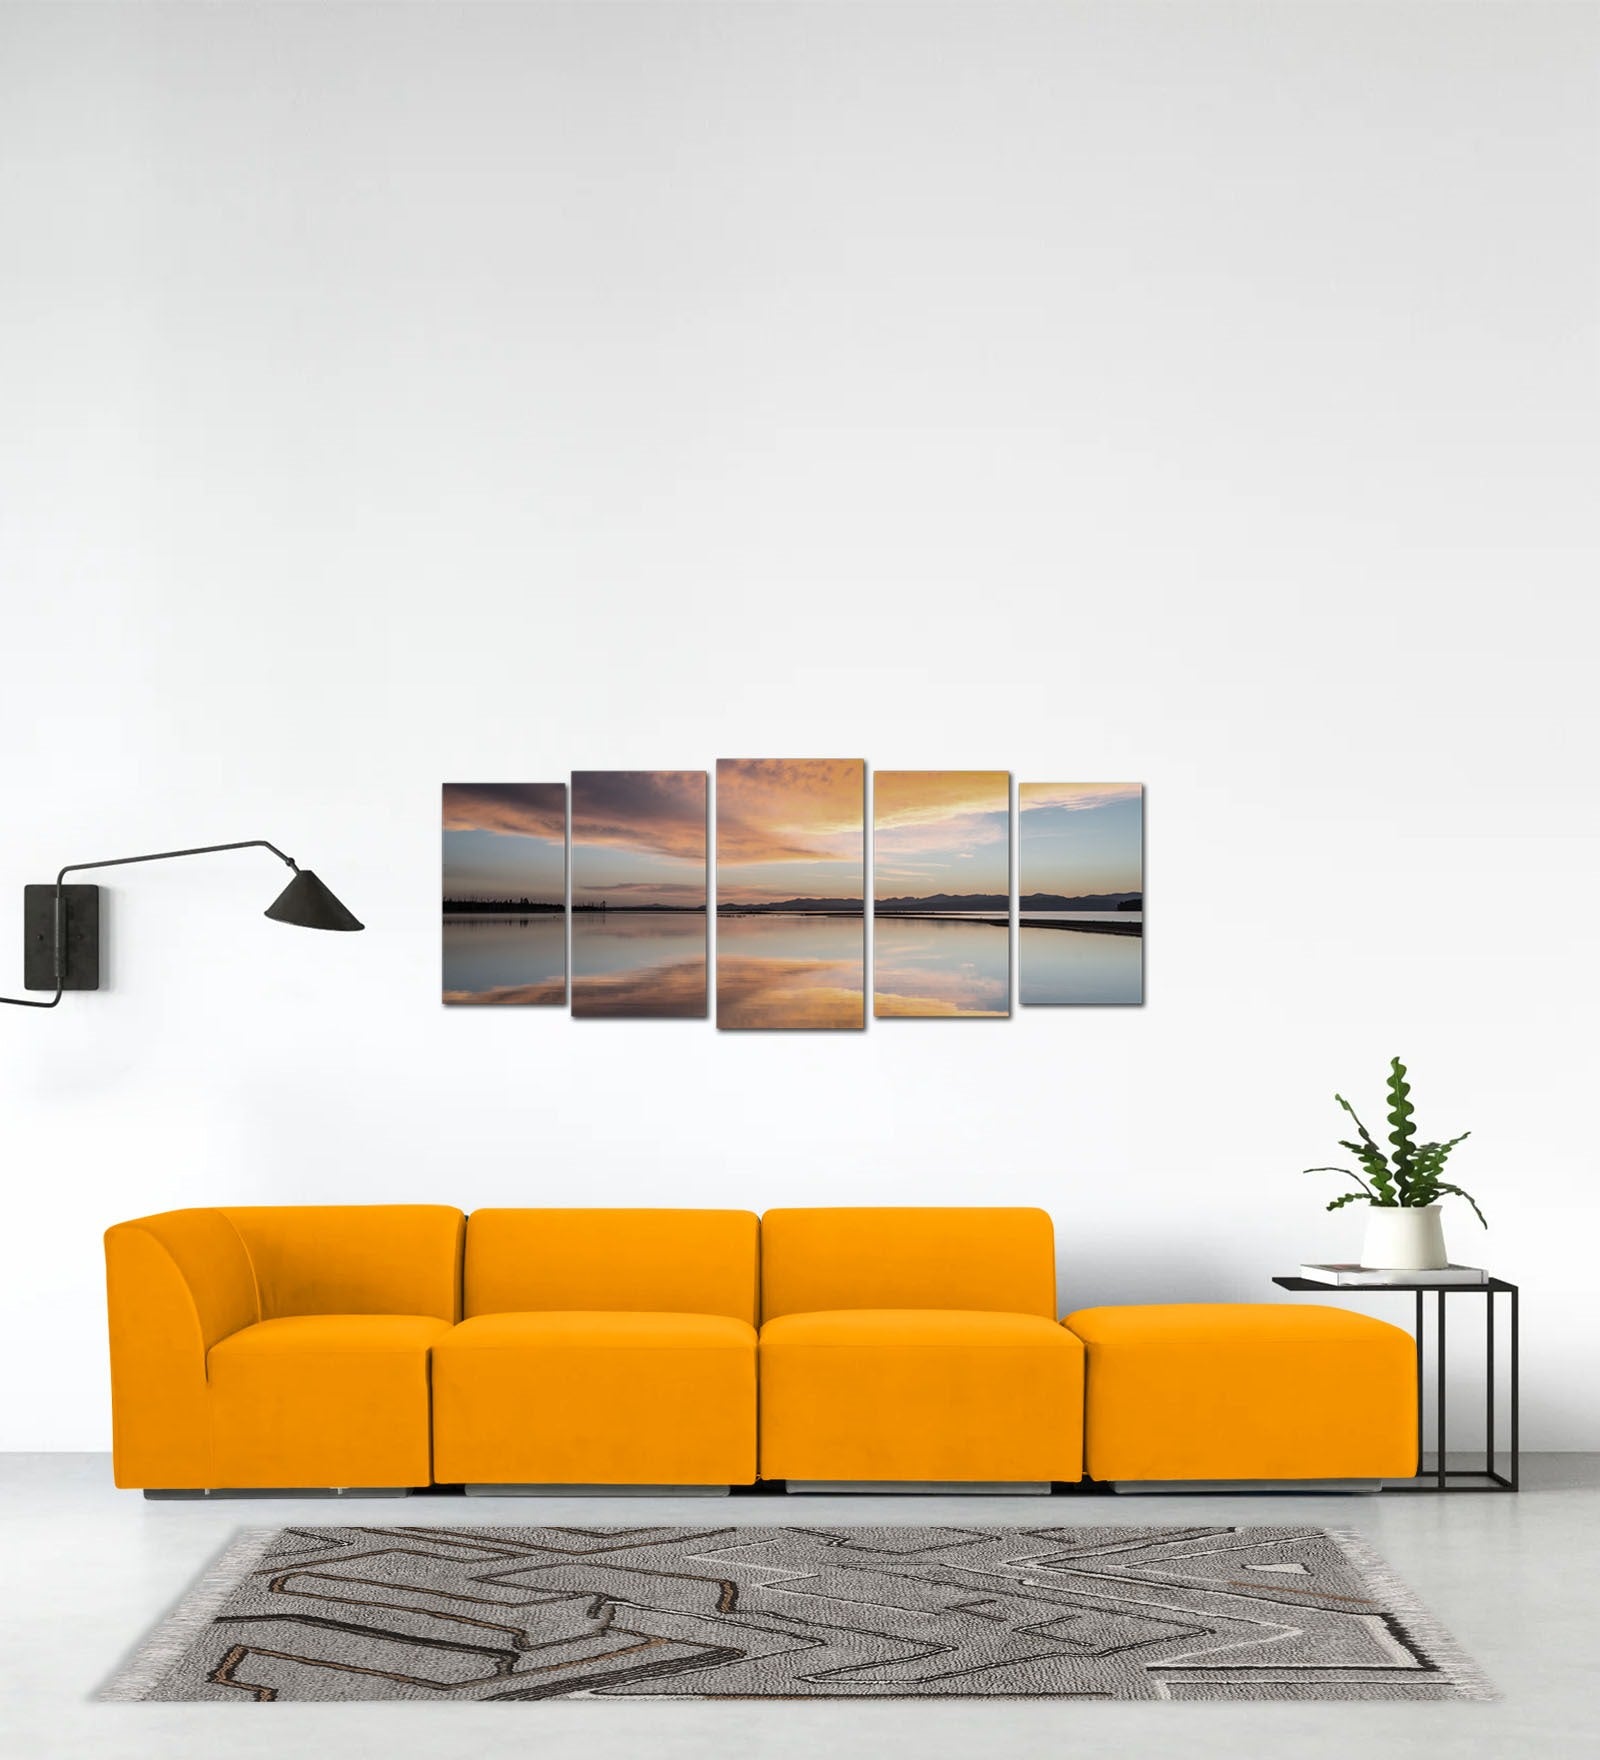 Bufa Velvet RHS Sectional Sofa In Saffron Yellow Colour With Ottoman